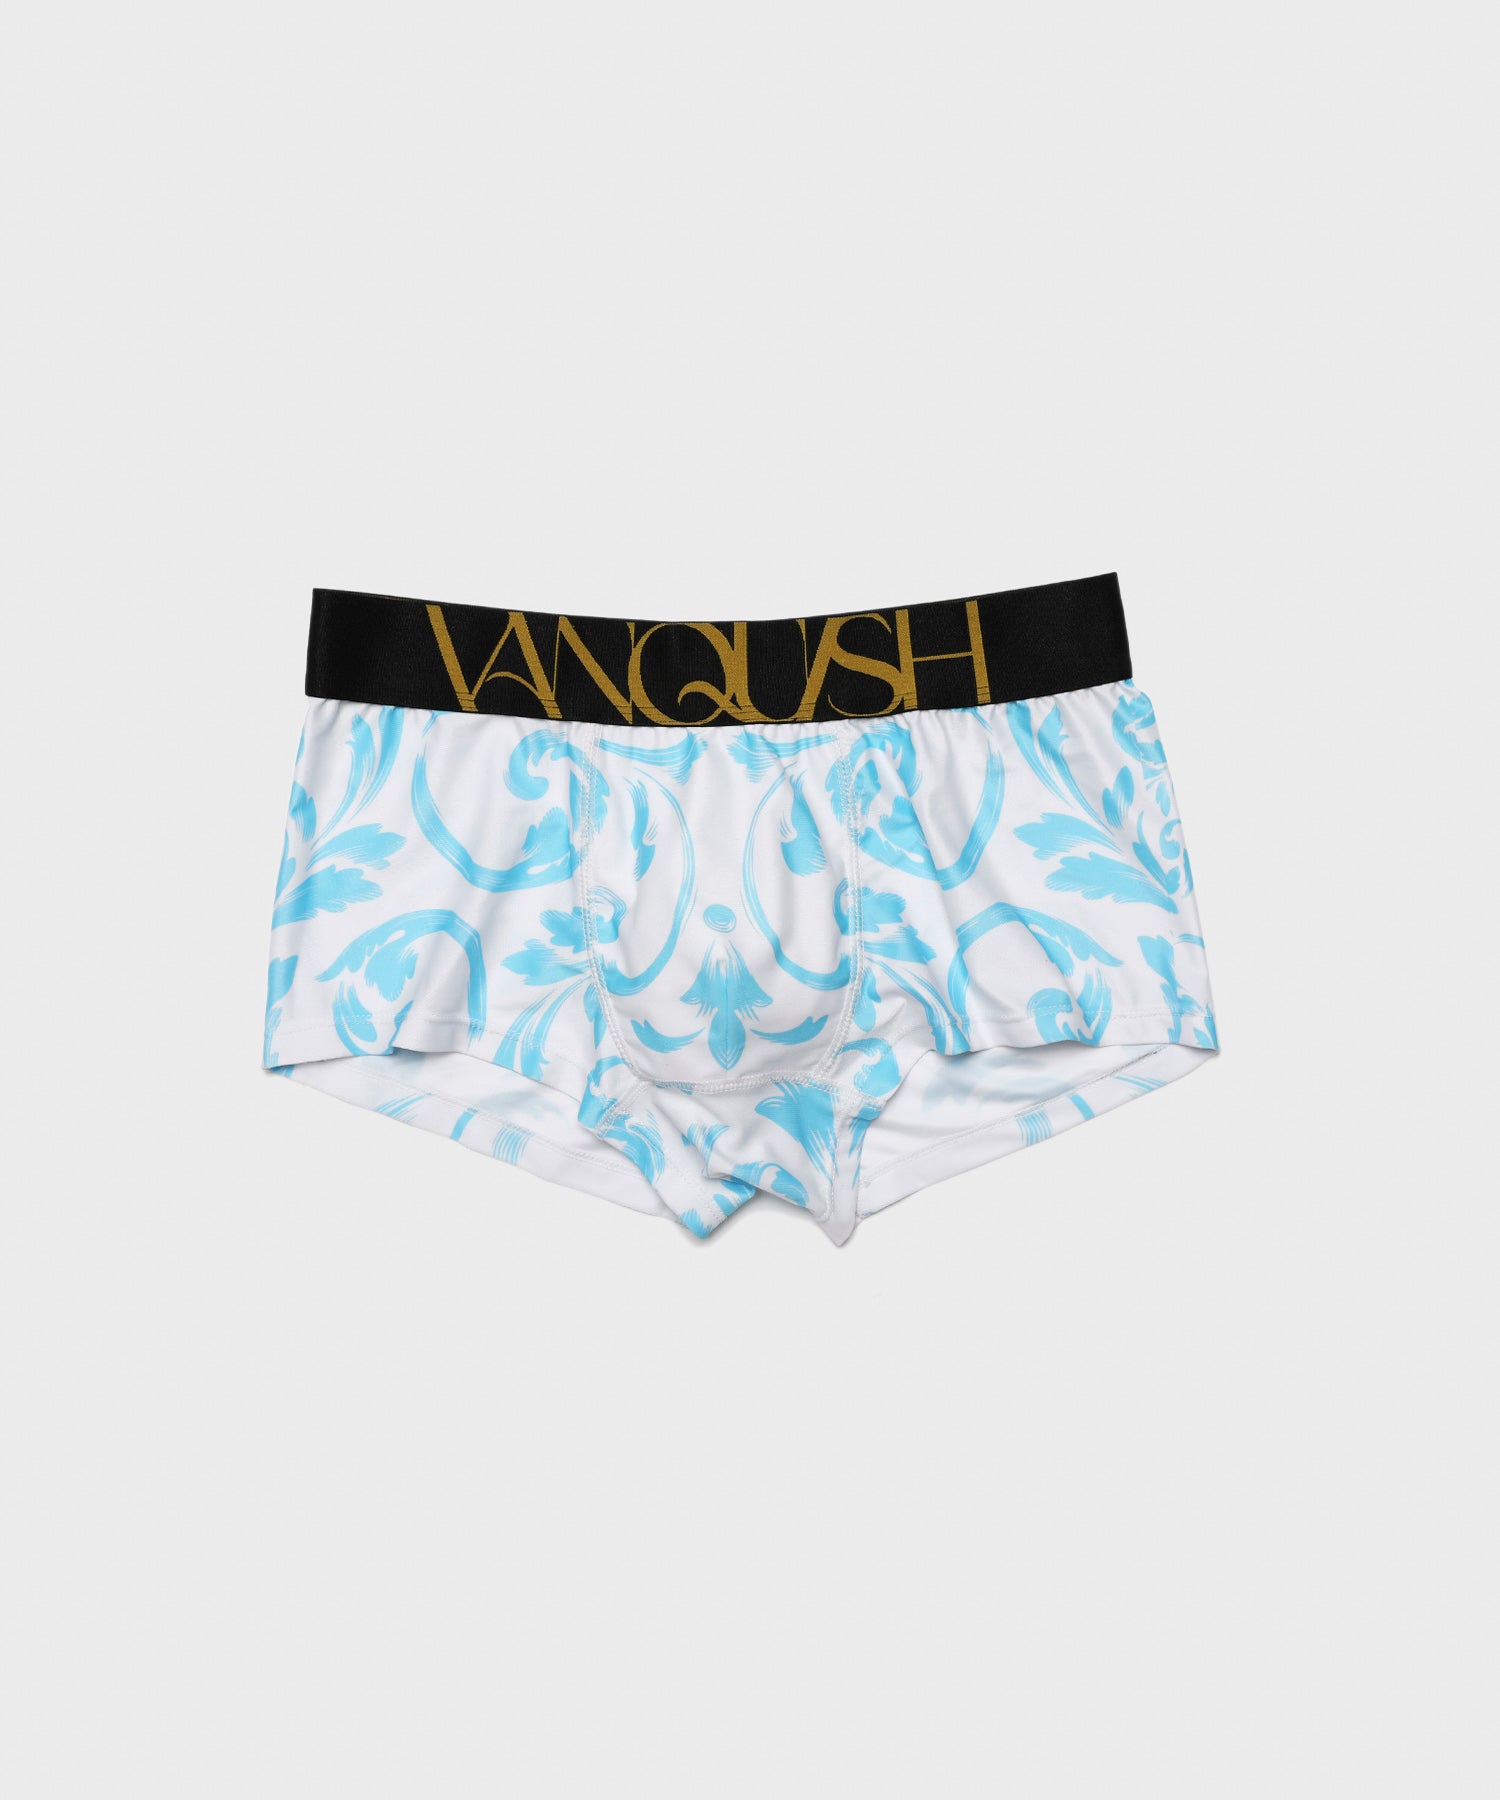 Damask Pattern Print Underwear [VUW145]